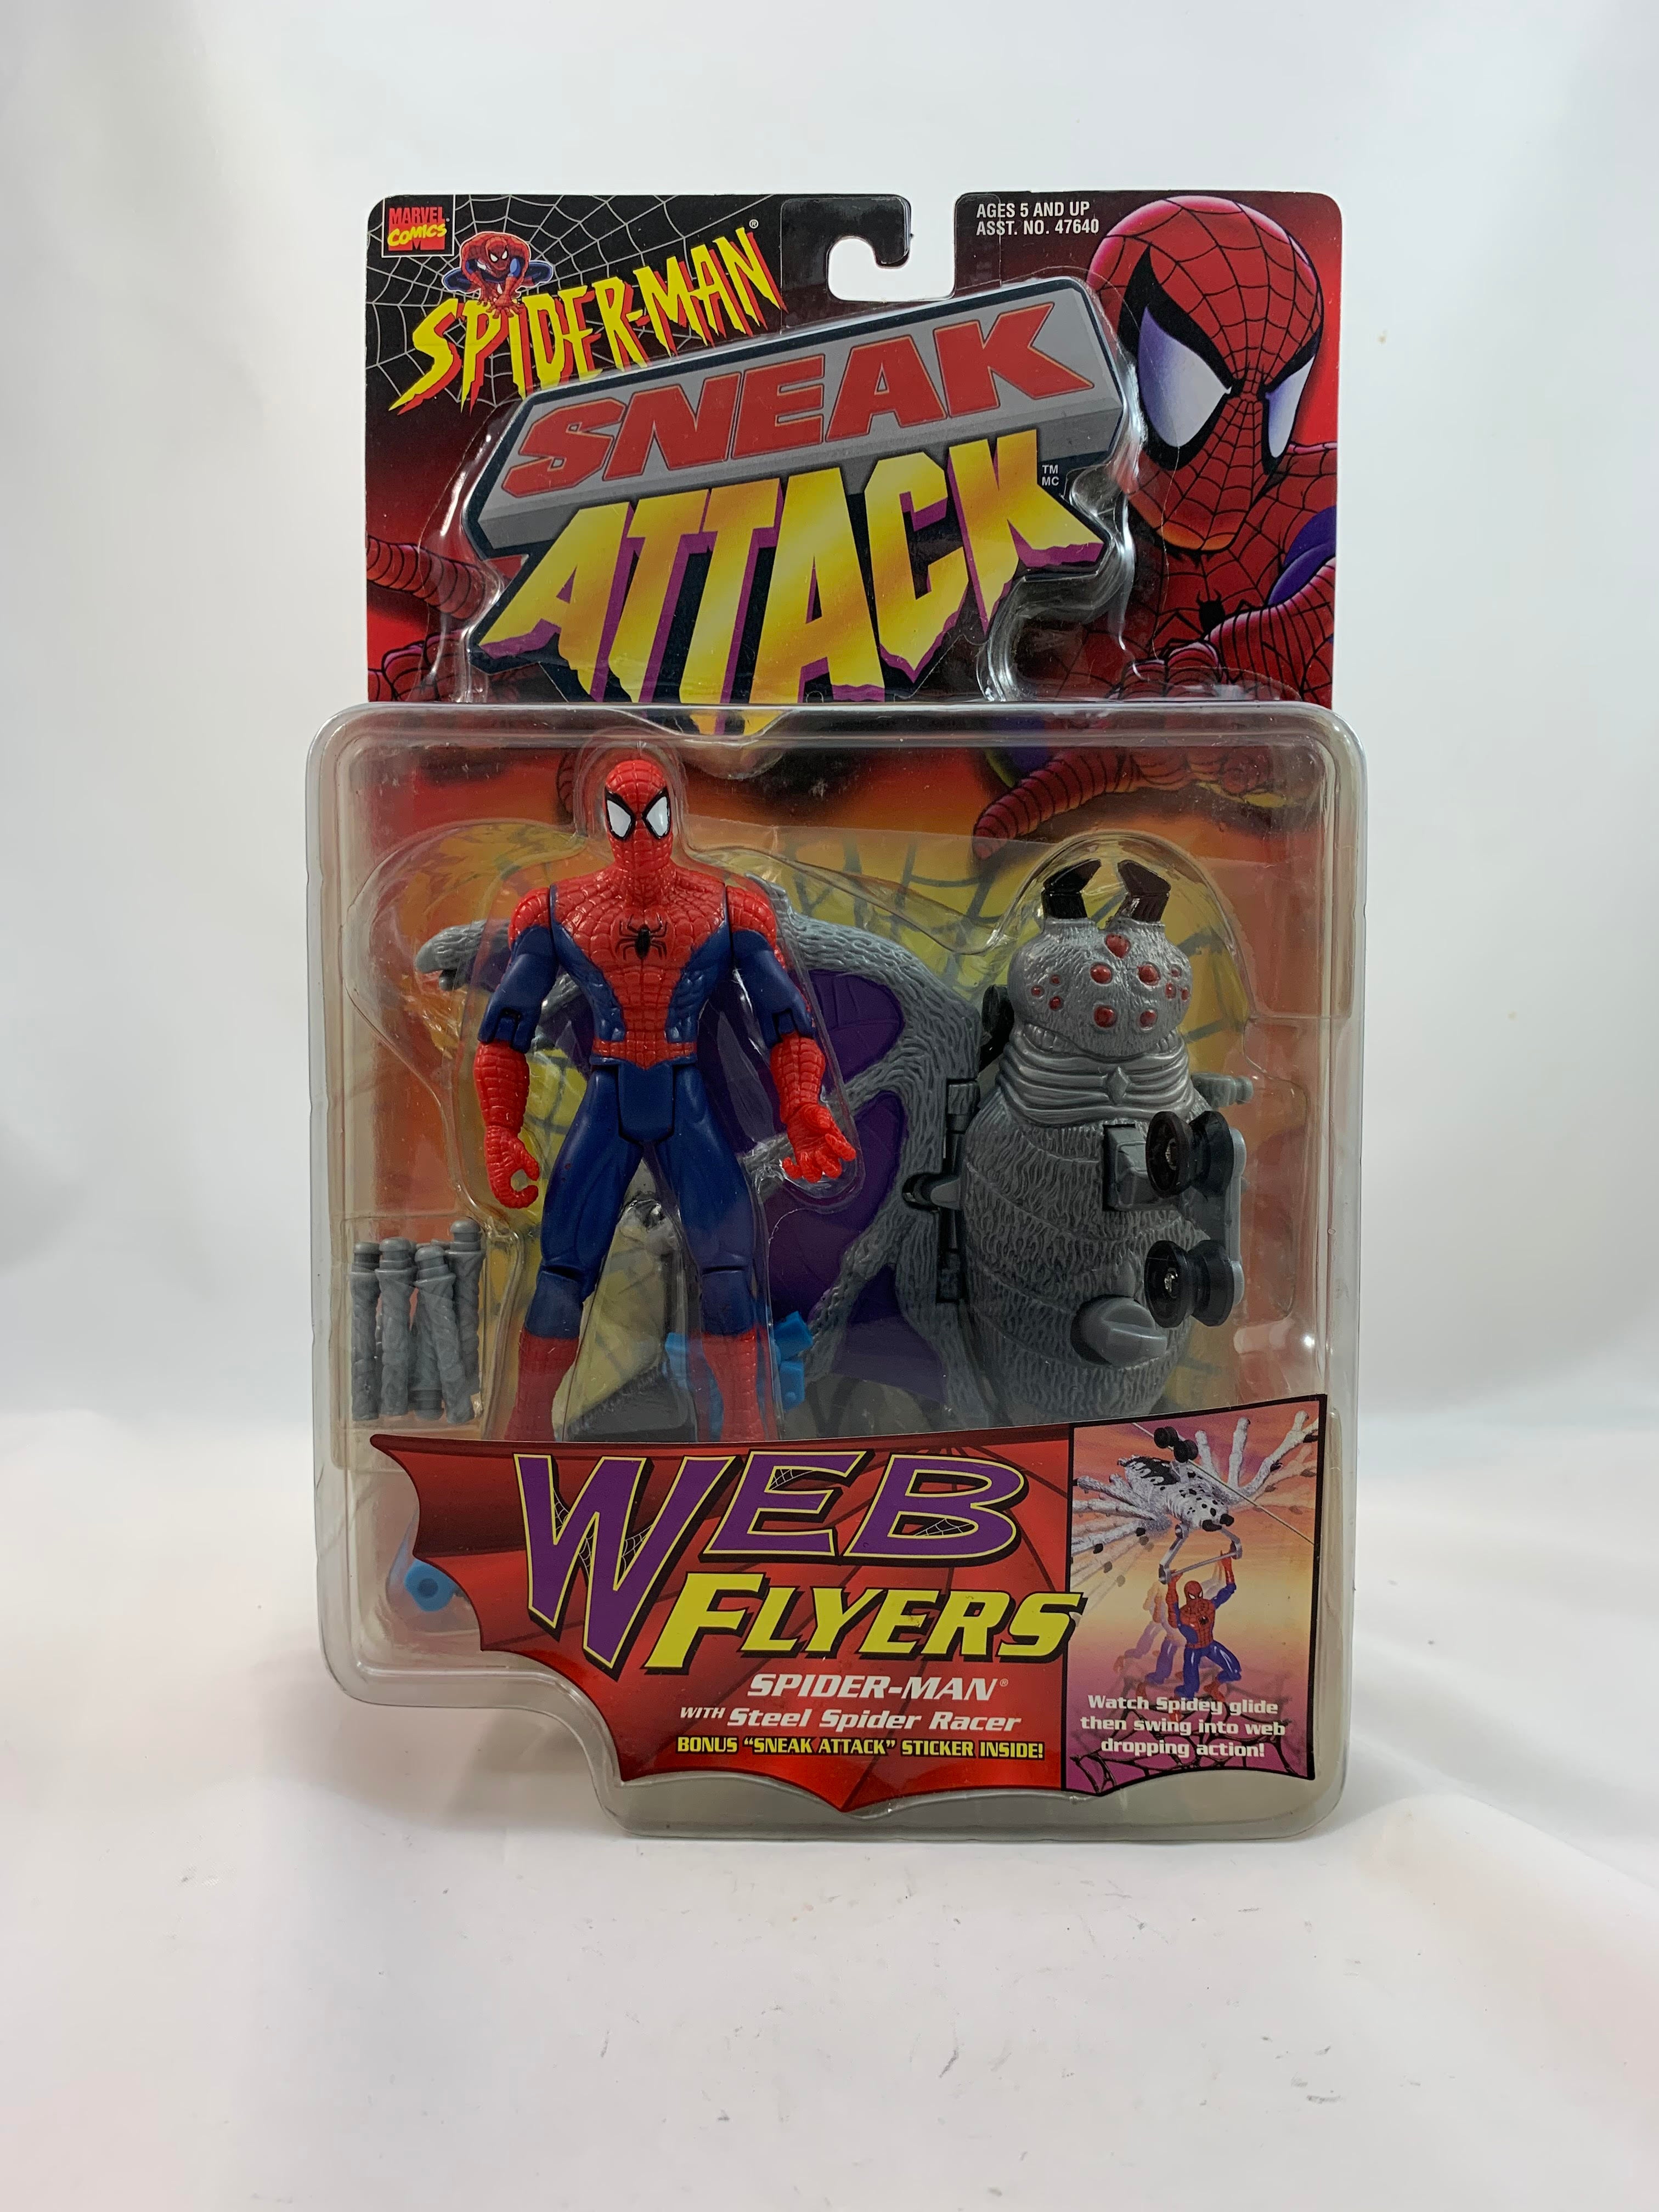 Toy Biz Spiderman Sneak Attack Web Flyers Mint In Very Nice Card 1997